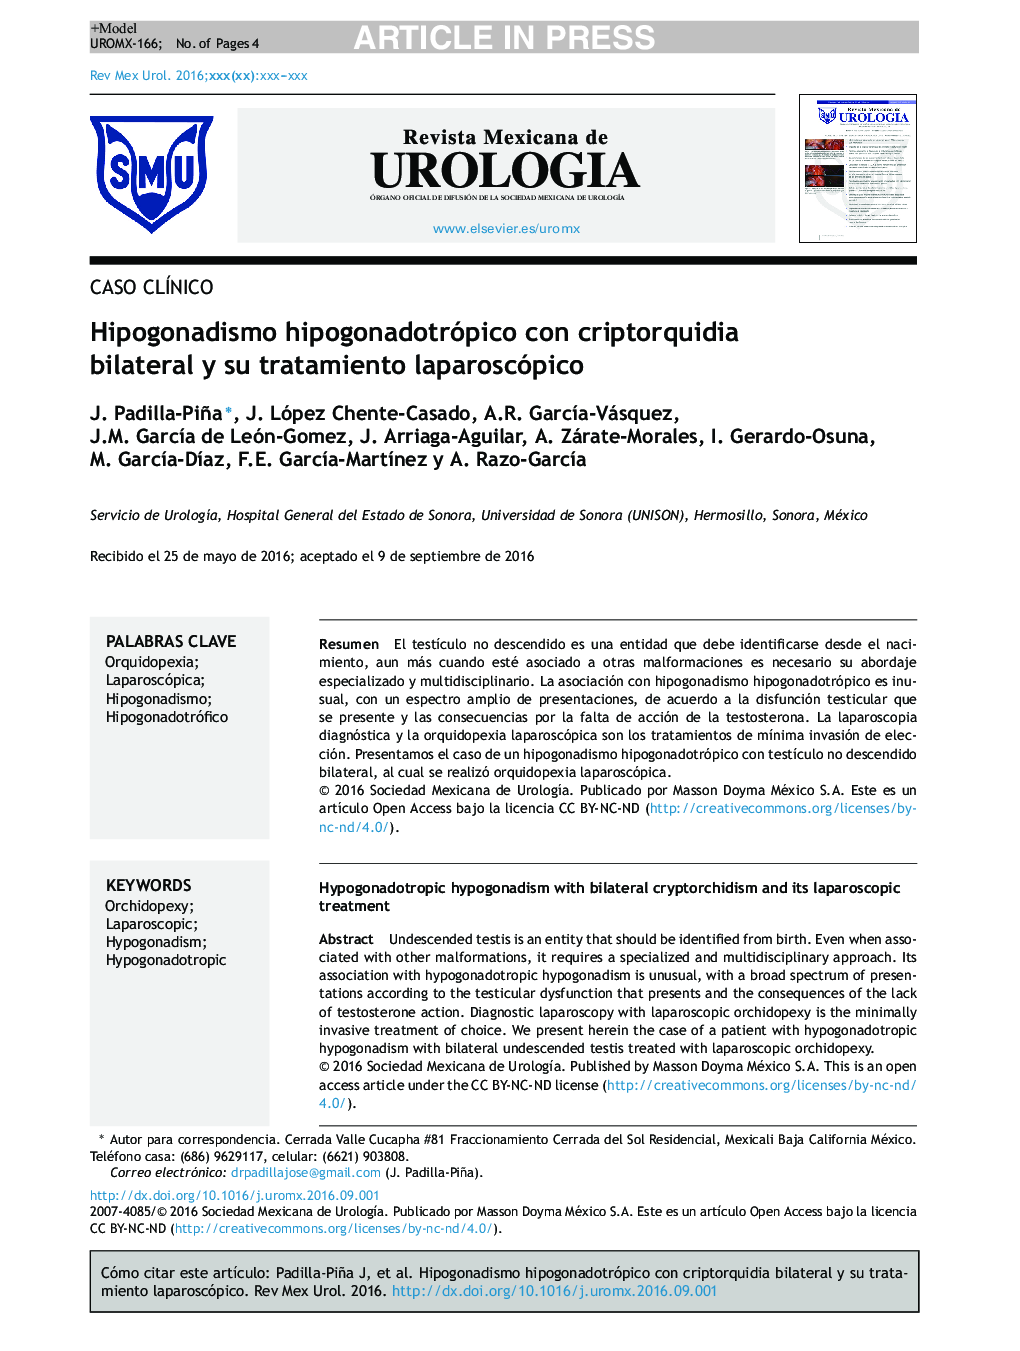 Hipogonadismo hipogonadotrópico con criptorquidia bilateral y su tratamiento laparoscópico